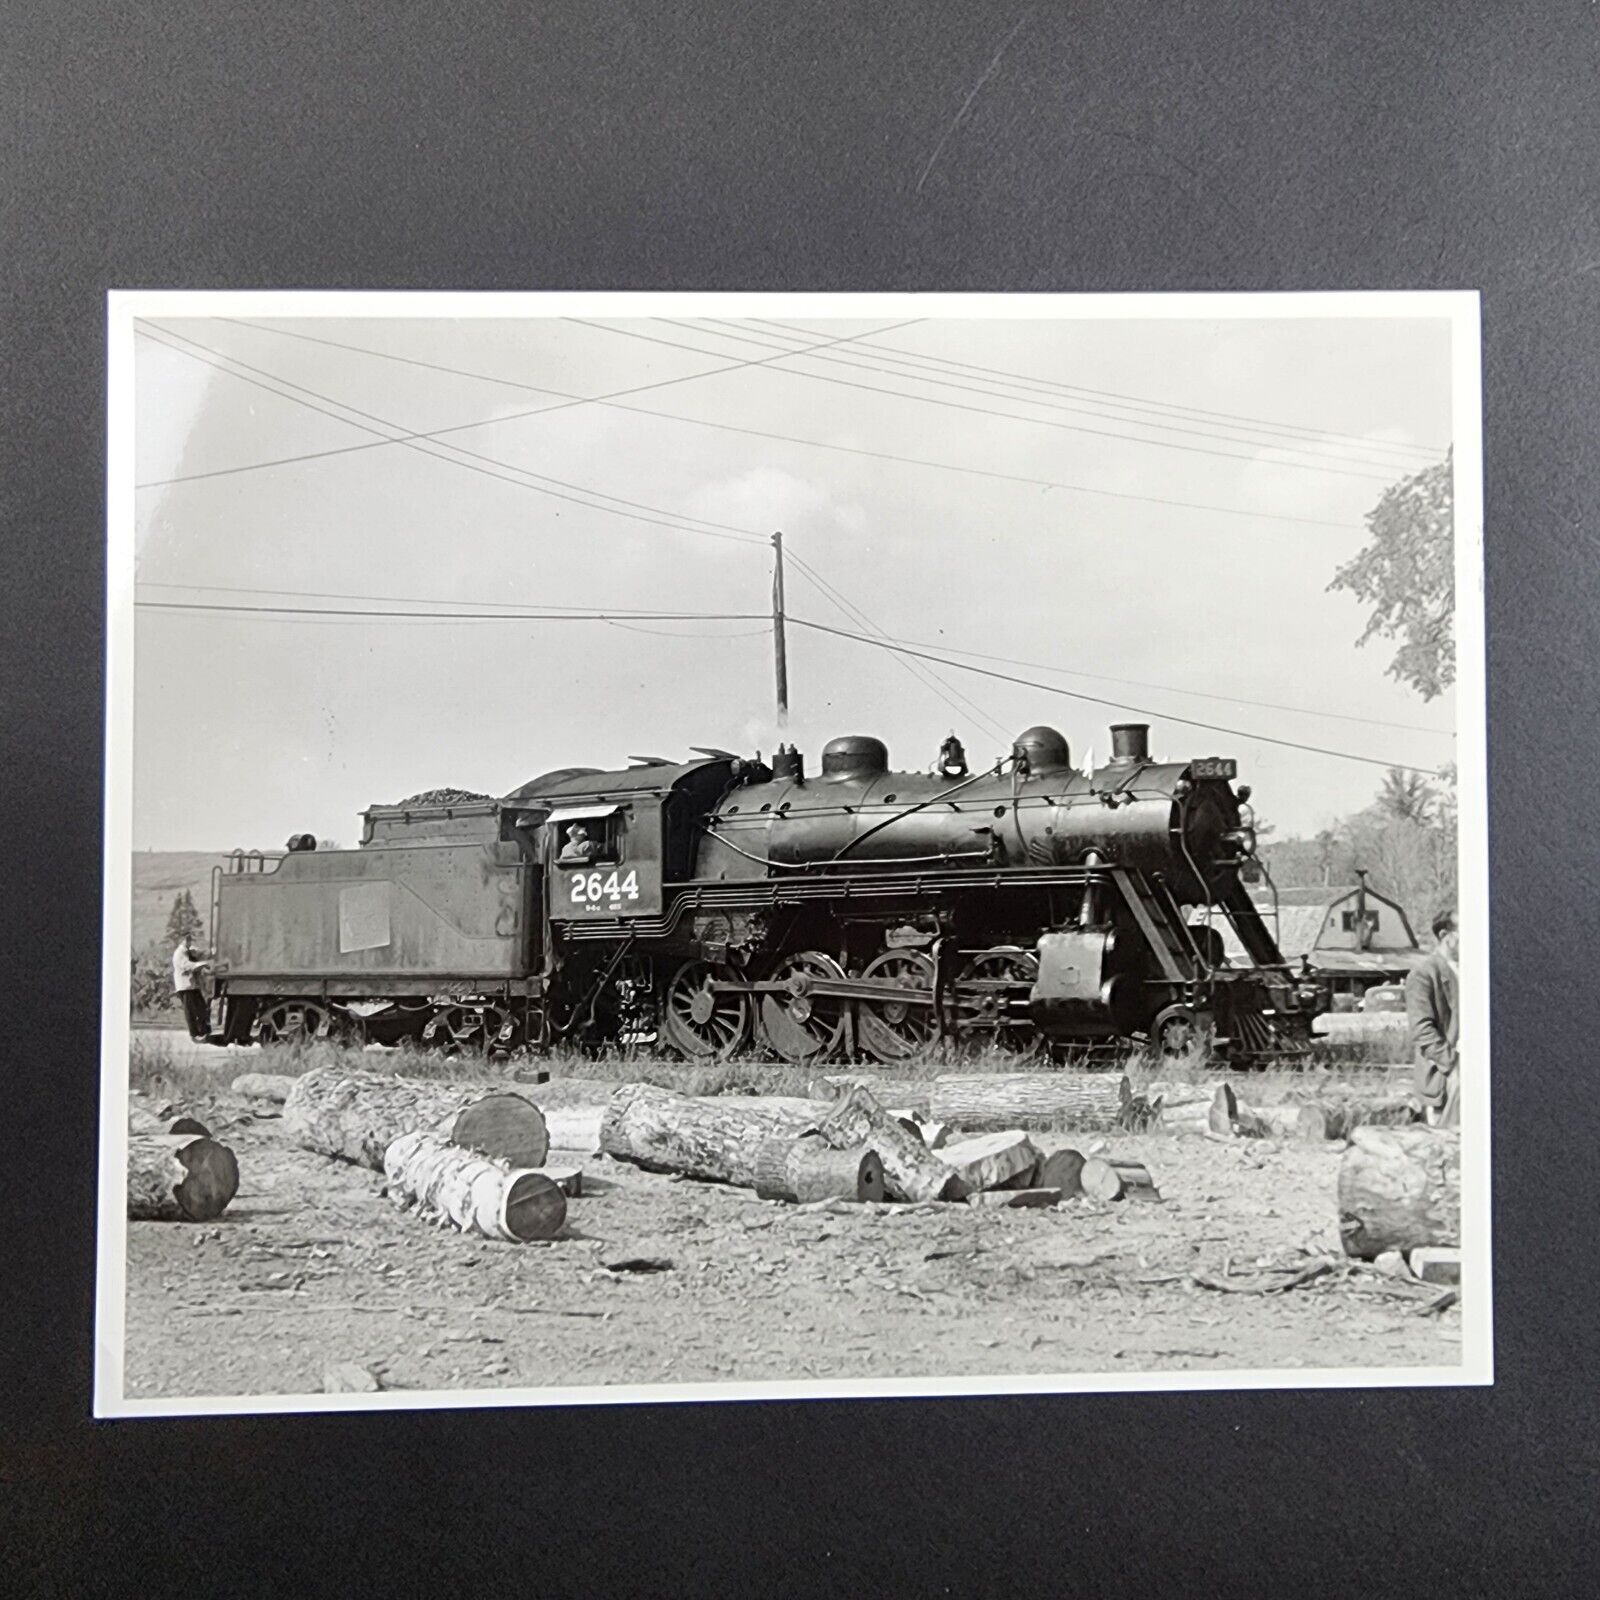 Vintage 8x10 Steam Locomotive Photo CNR#2644 2-8-0, Taken Sept 1956